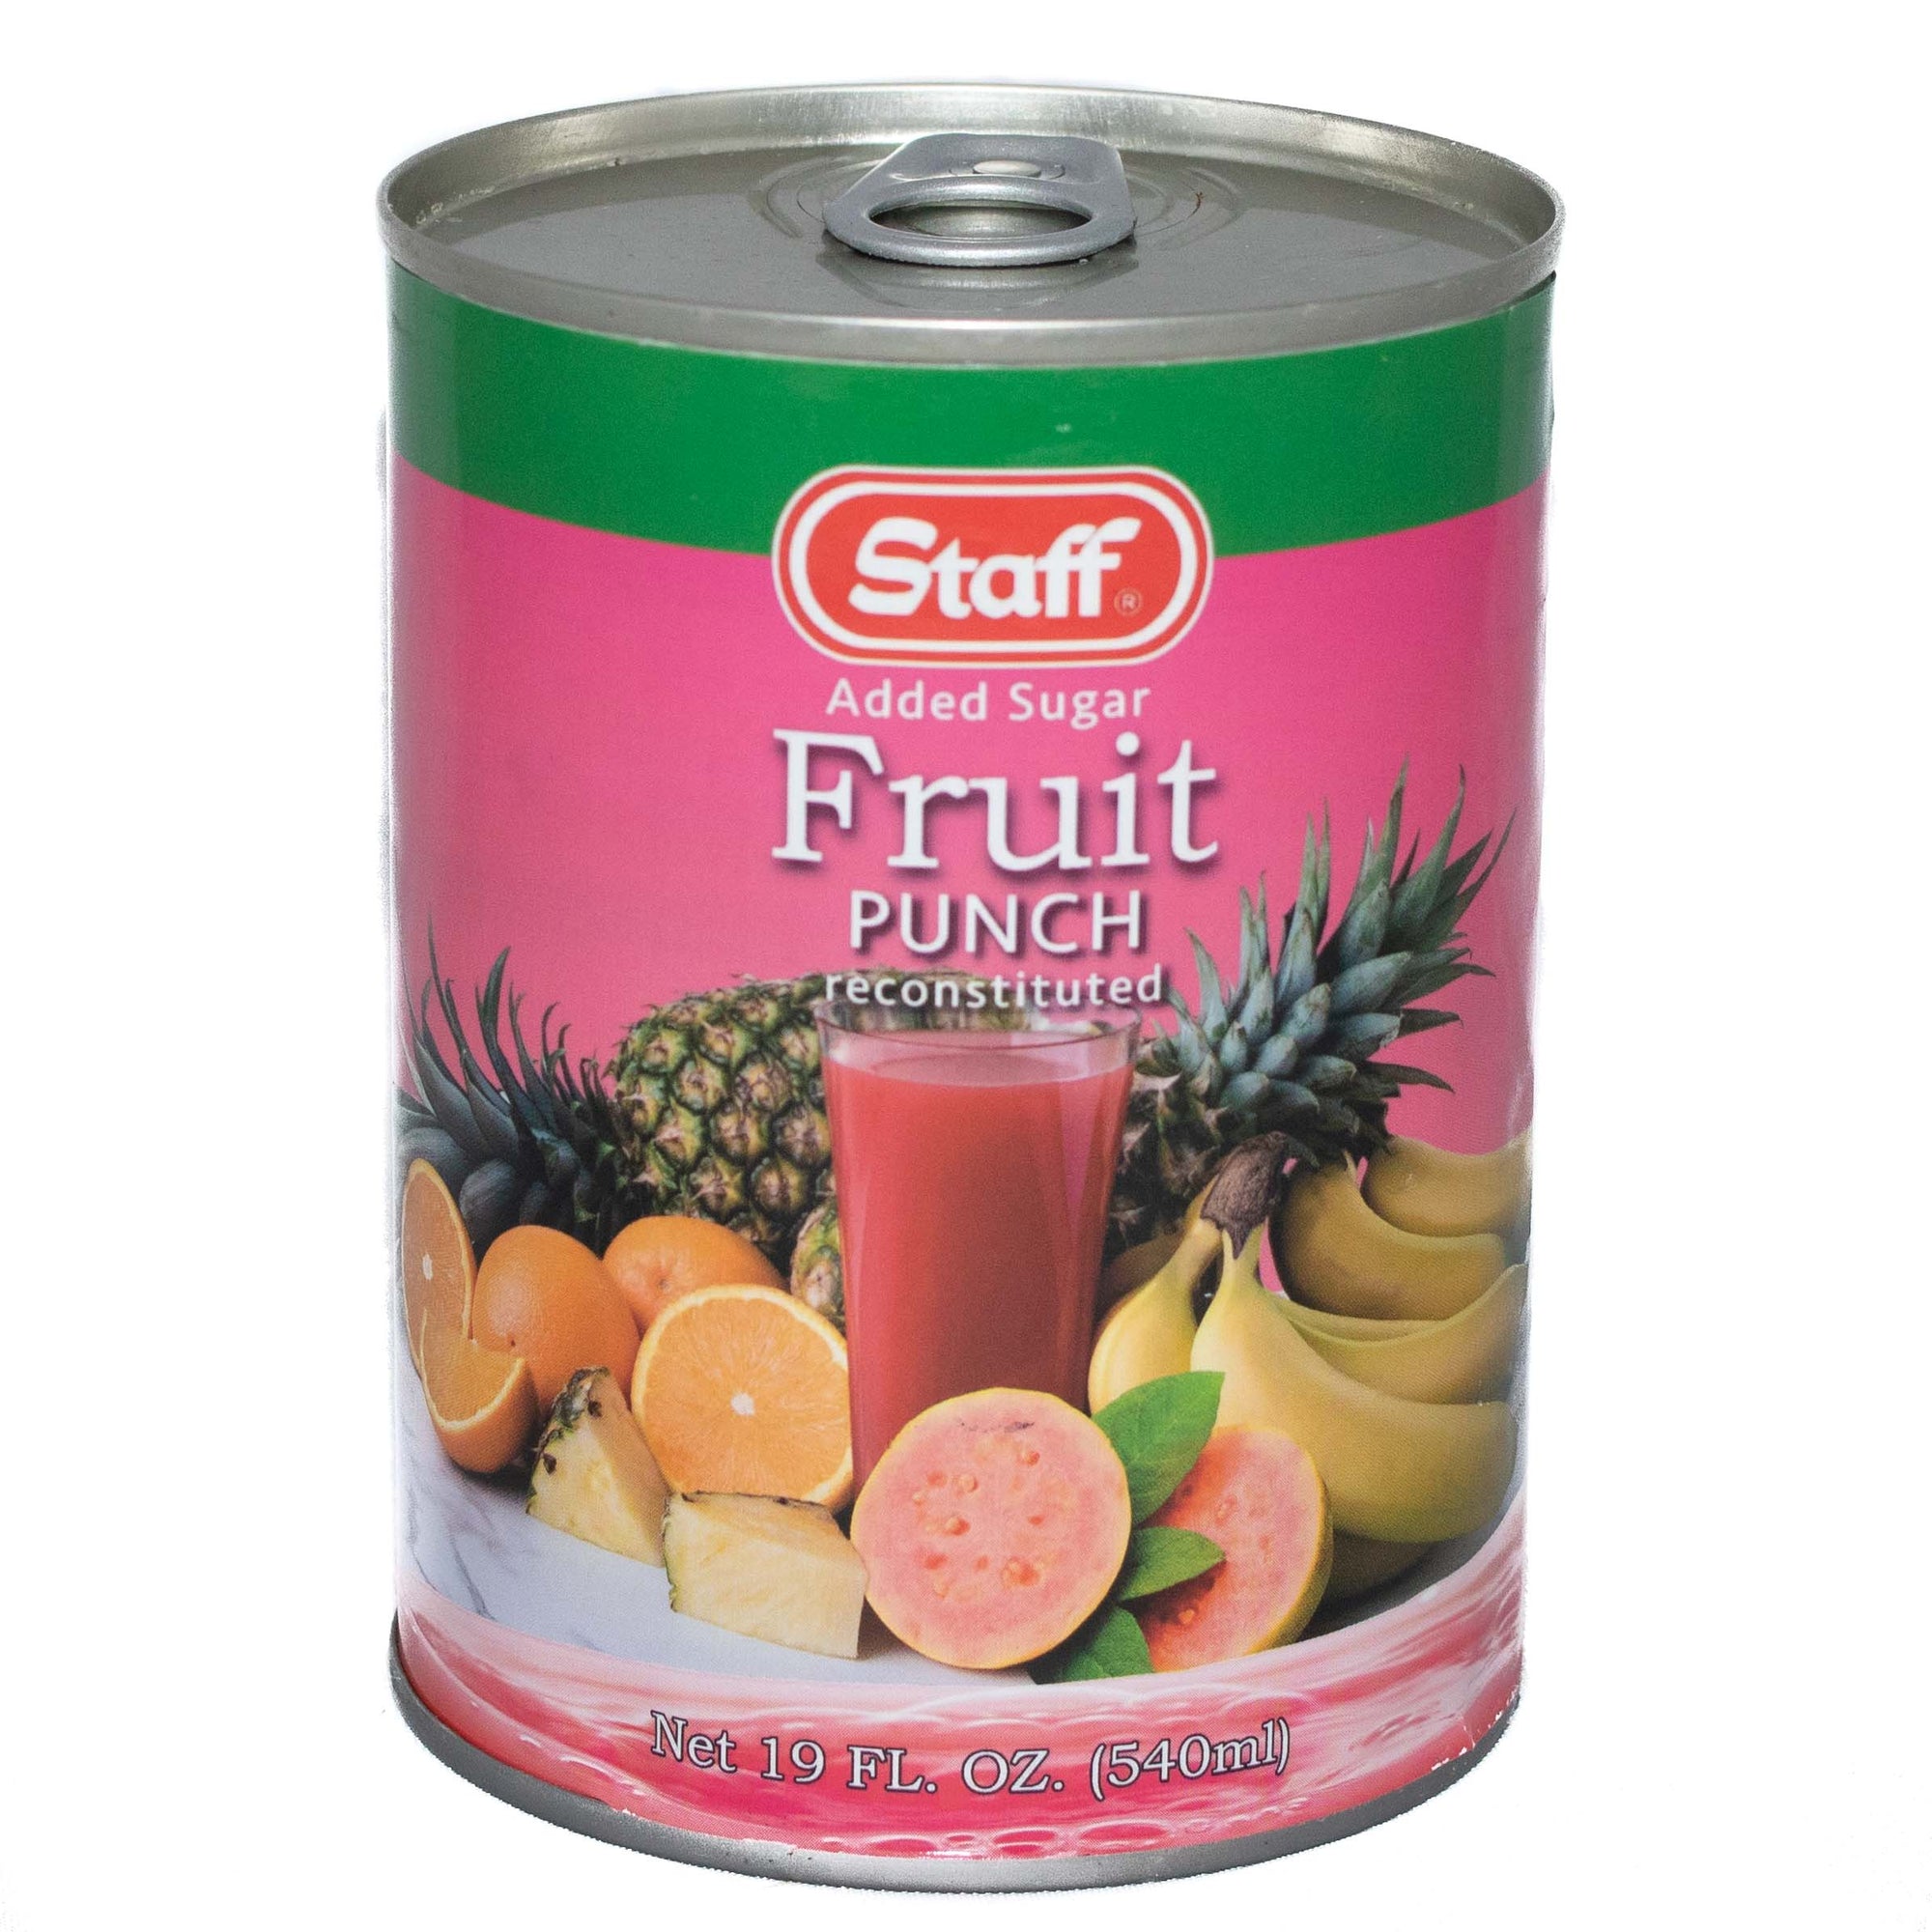 STAFF Fruit Punch Juice 19oz